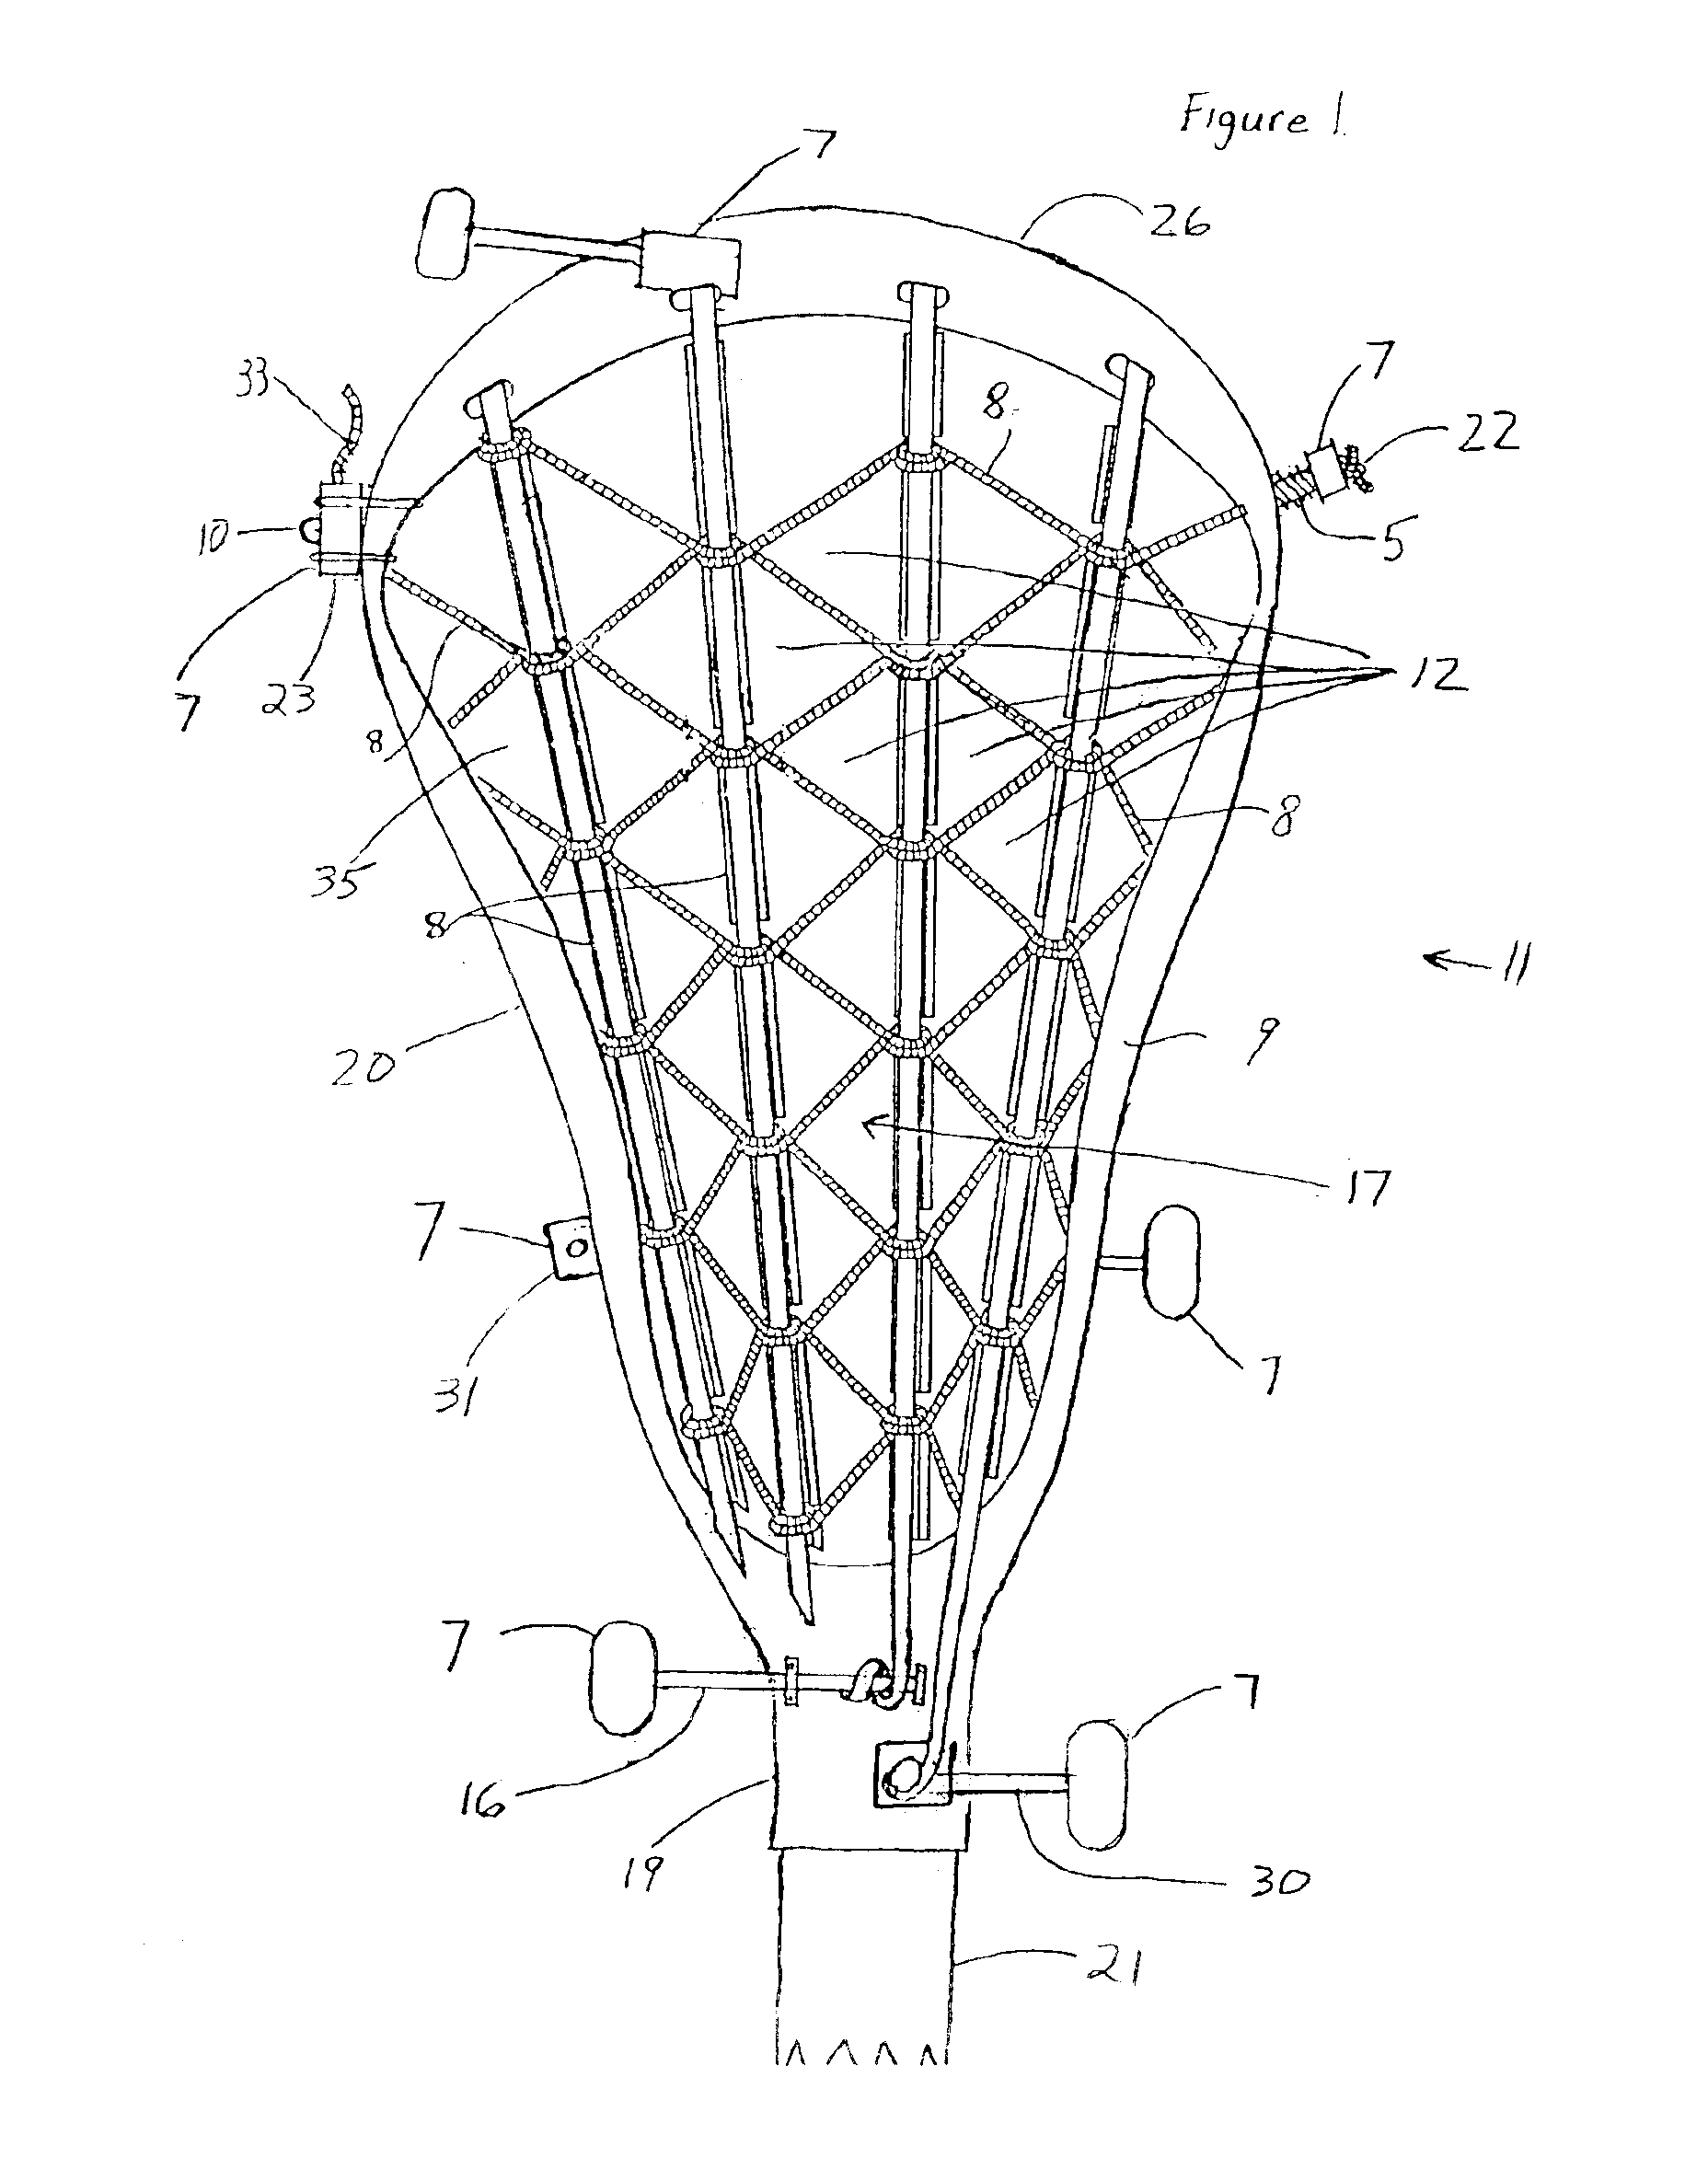 Apparatus for a lacrosse stick head